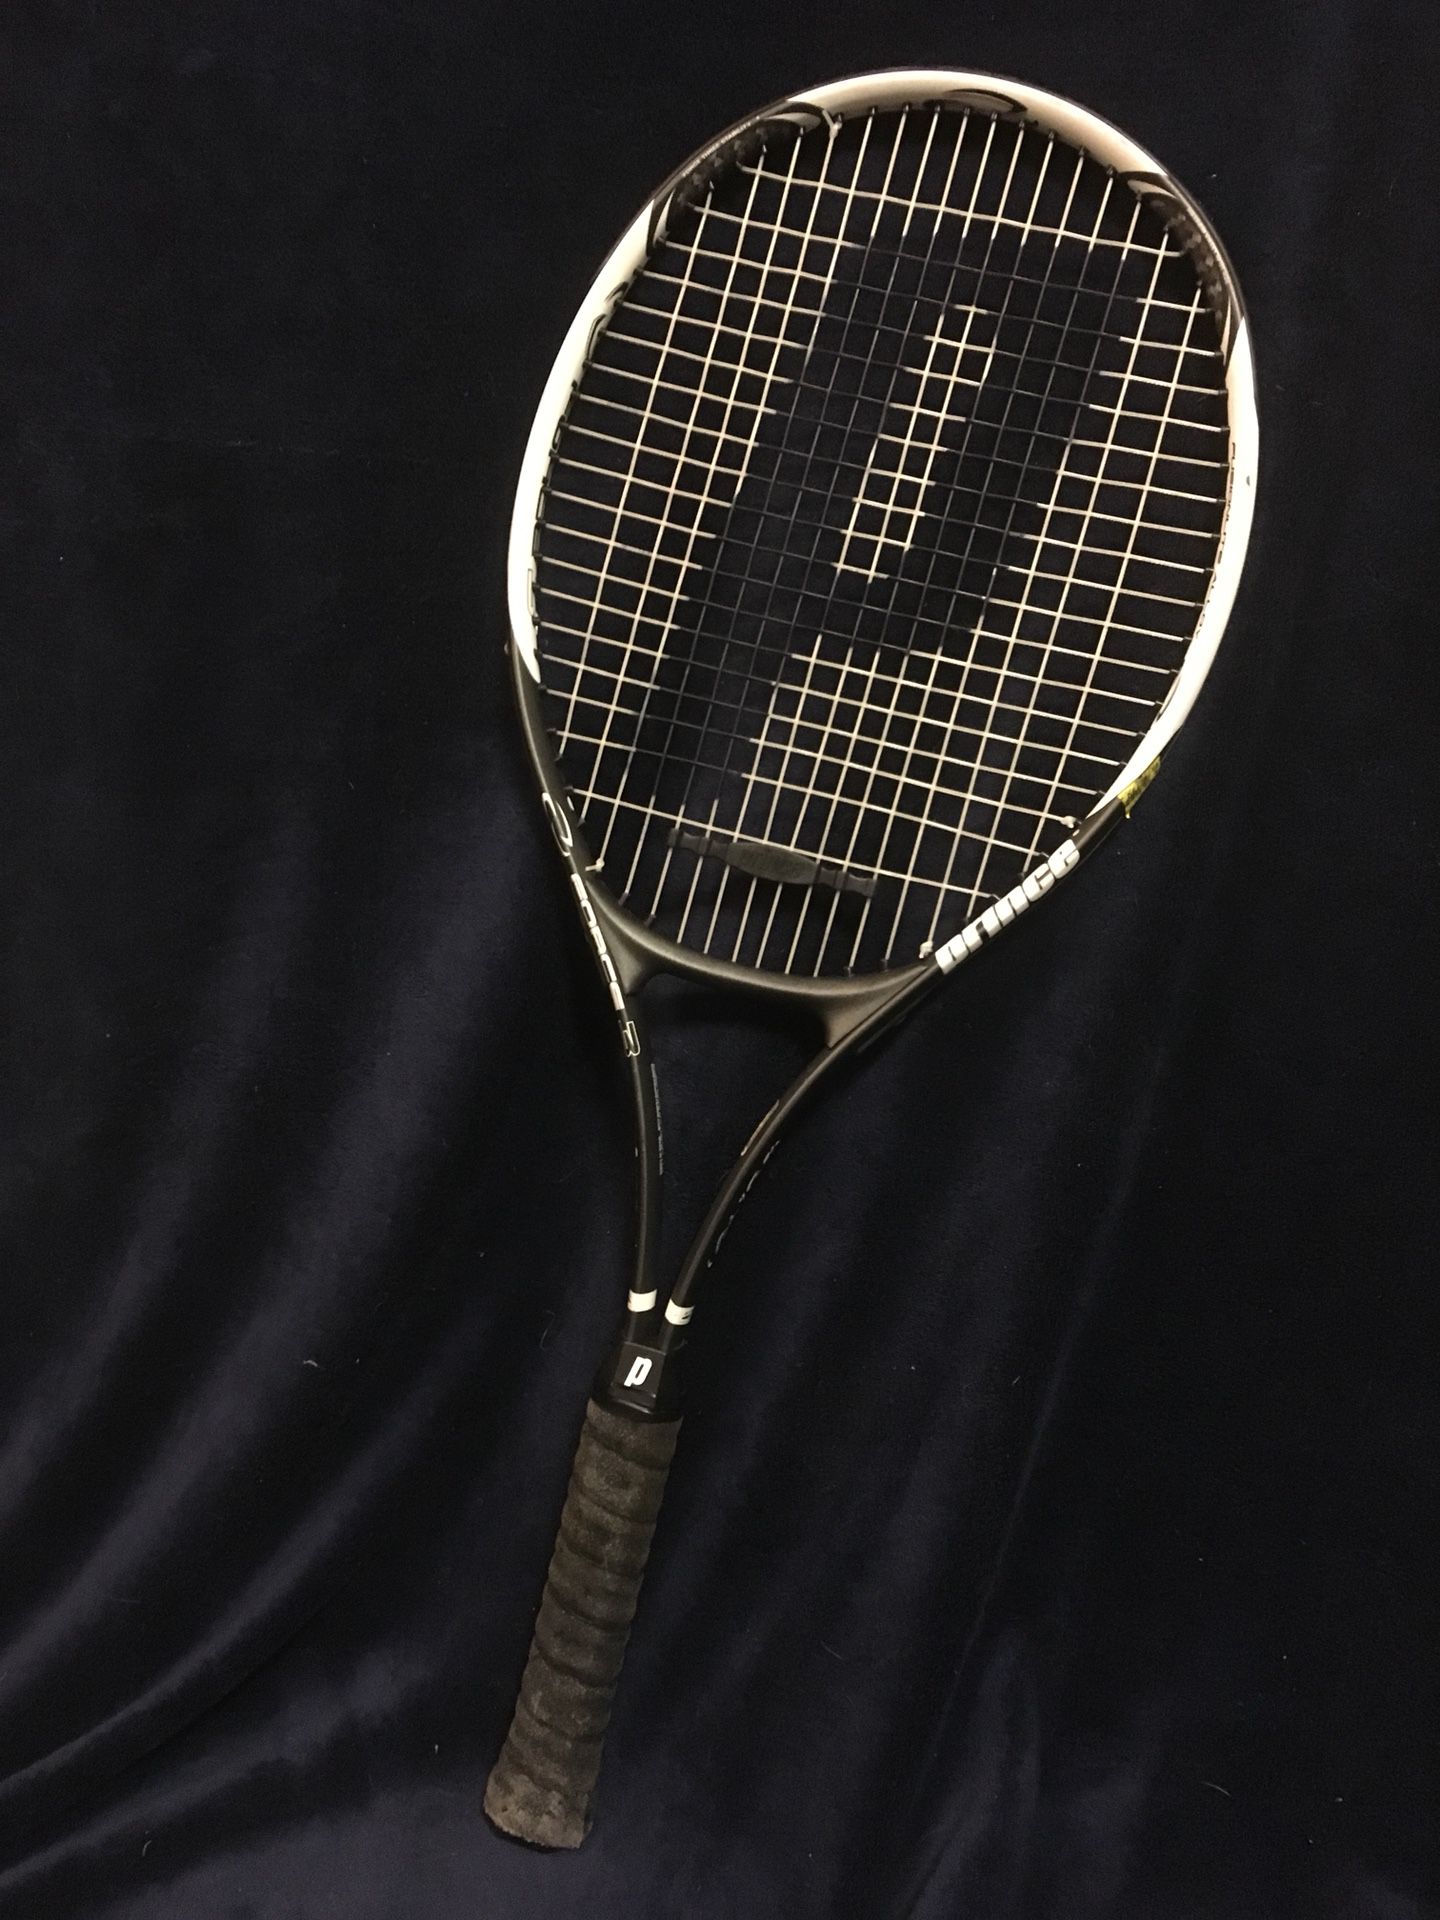 Vertrek grot Dageraad Prince Force 3 Burst Tennis Racket for Sale in Lexington, KY - OfferUp